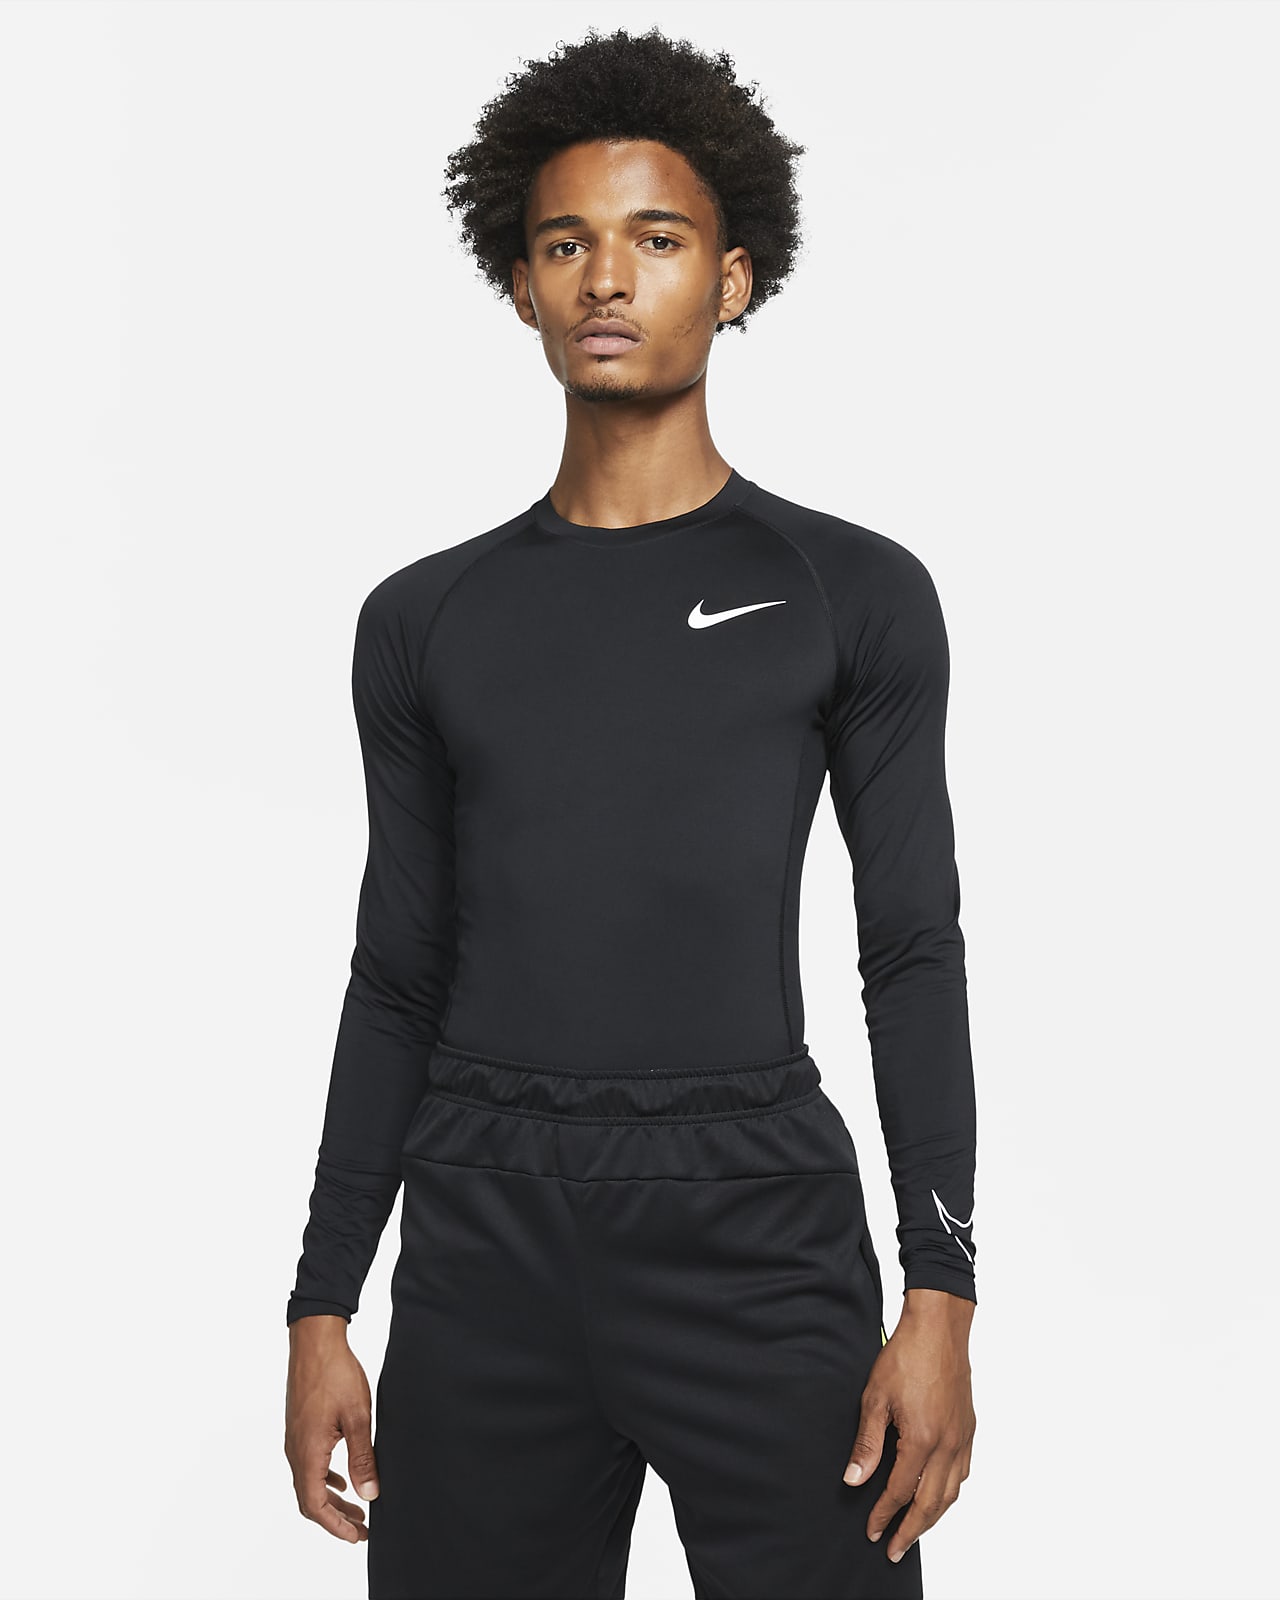 Nike Pro Dri-FIT Camiseta de manga larga y ajuste ceñido - Hombre